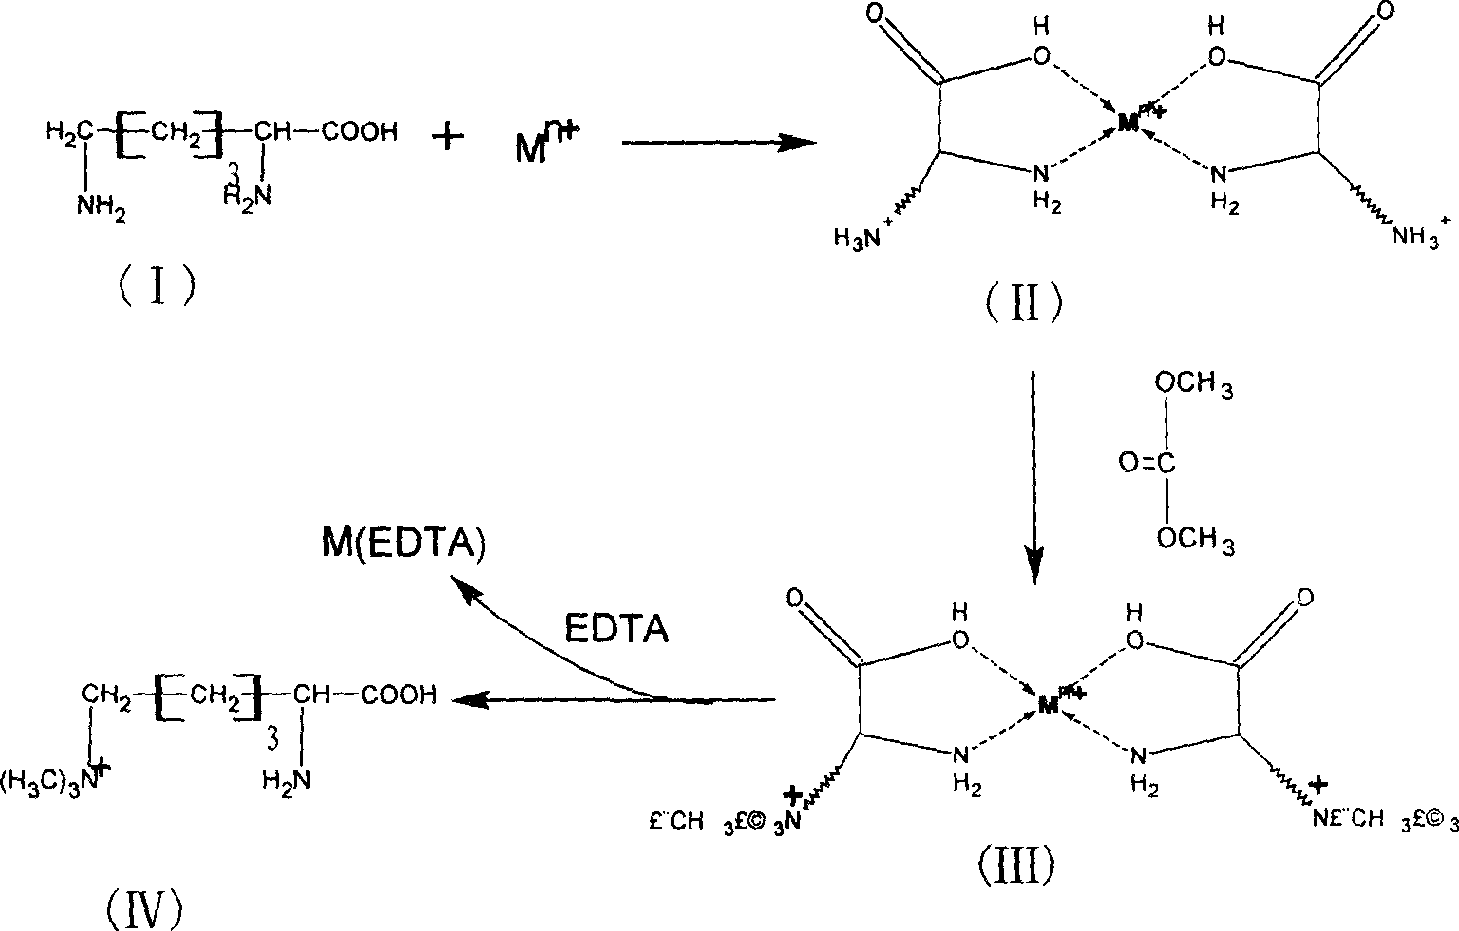 Cleaning production method of raw drug N-trimethyl lysine and application method